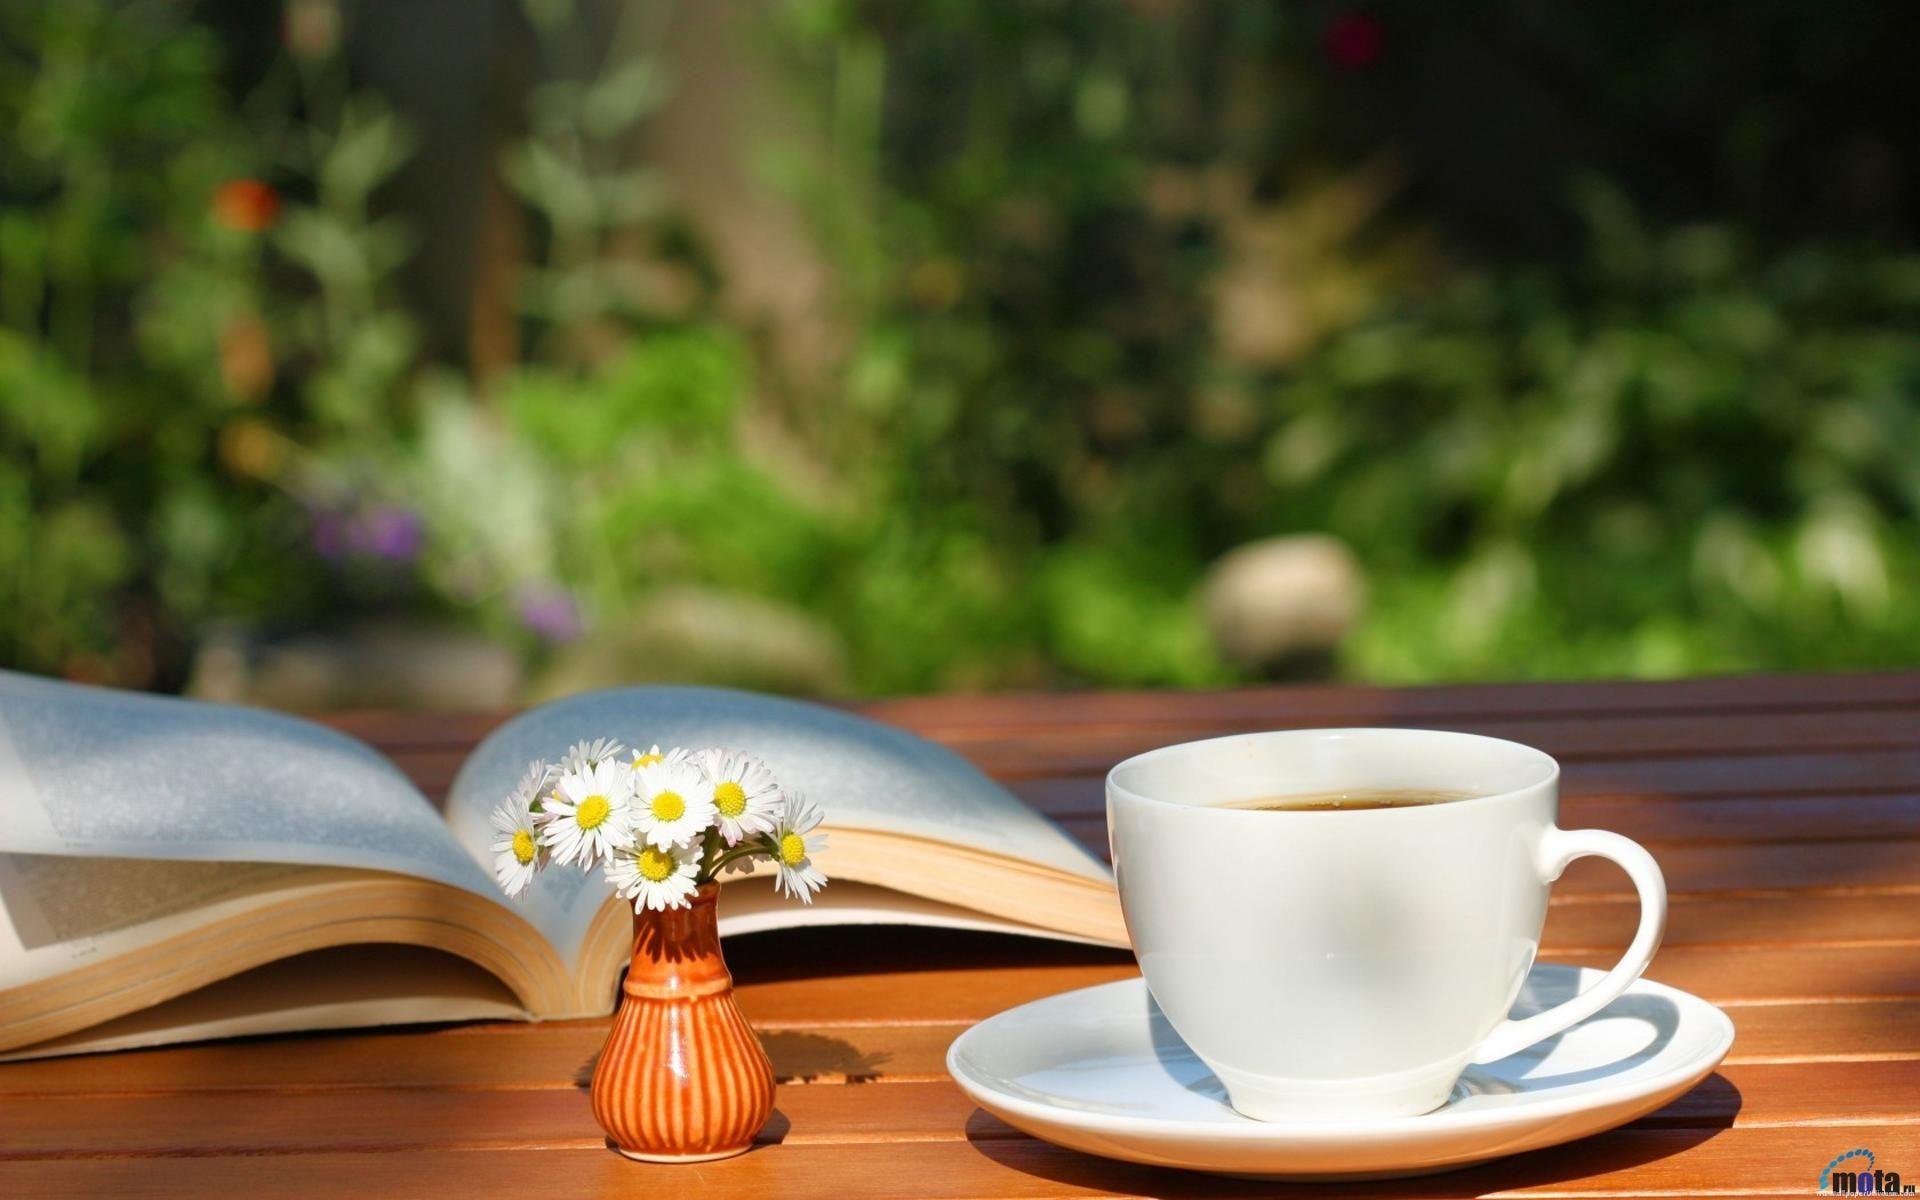 tea and a book in the garden desktop background tea and a book